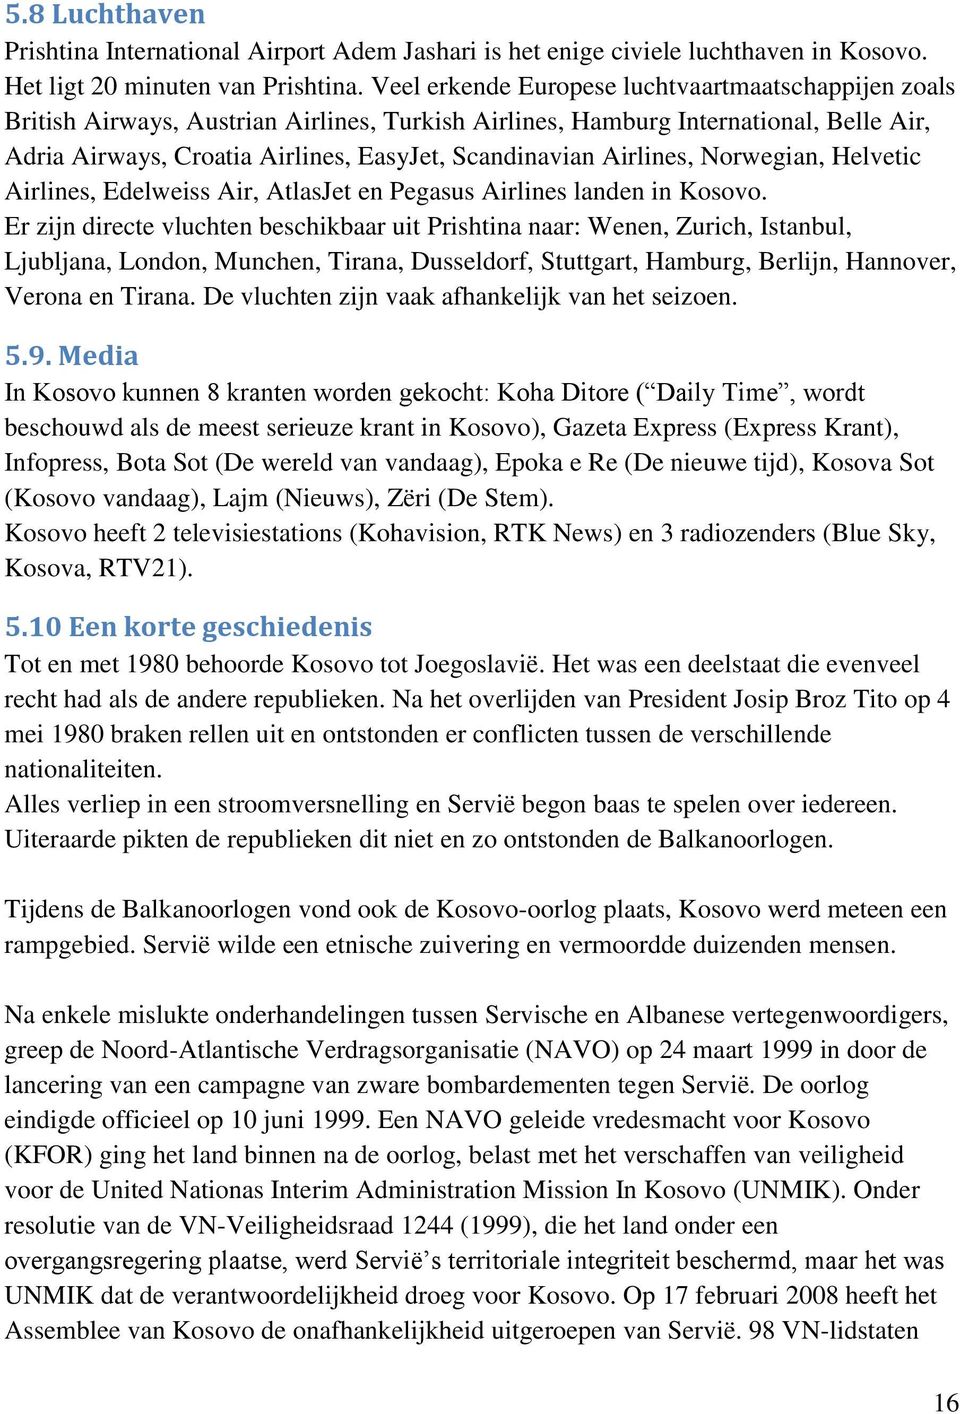 Airlines, Norwegian, Helvetic Airlines, Edelweiss Air, AtlasJet en Pegasus Airlines landen in Kosovo.